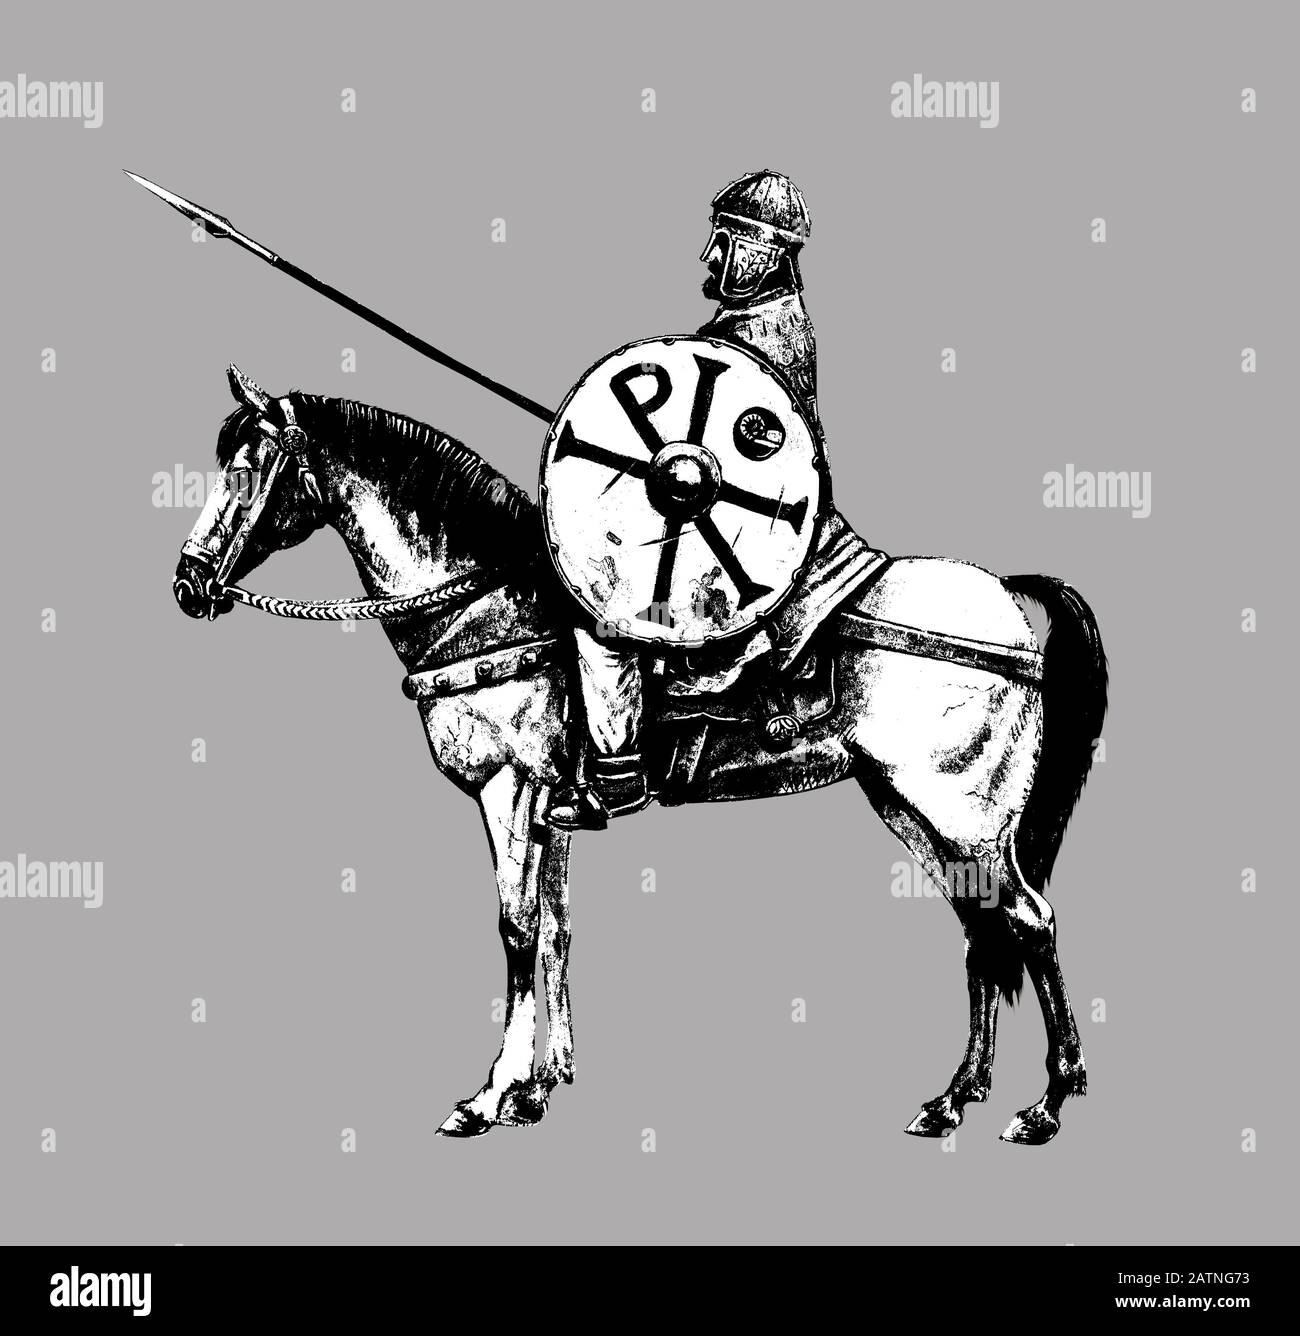 Ancient byzantine rider. Ancient warrior on horseback. Chi Rho on the knight's shield. Black white Illustration. Stock Photo